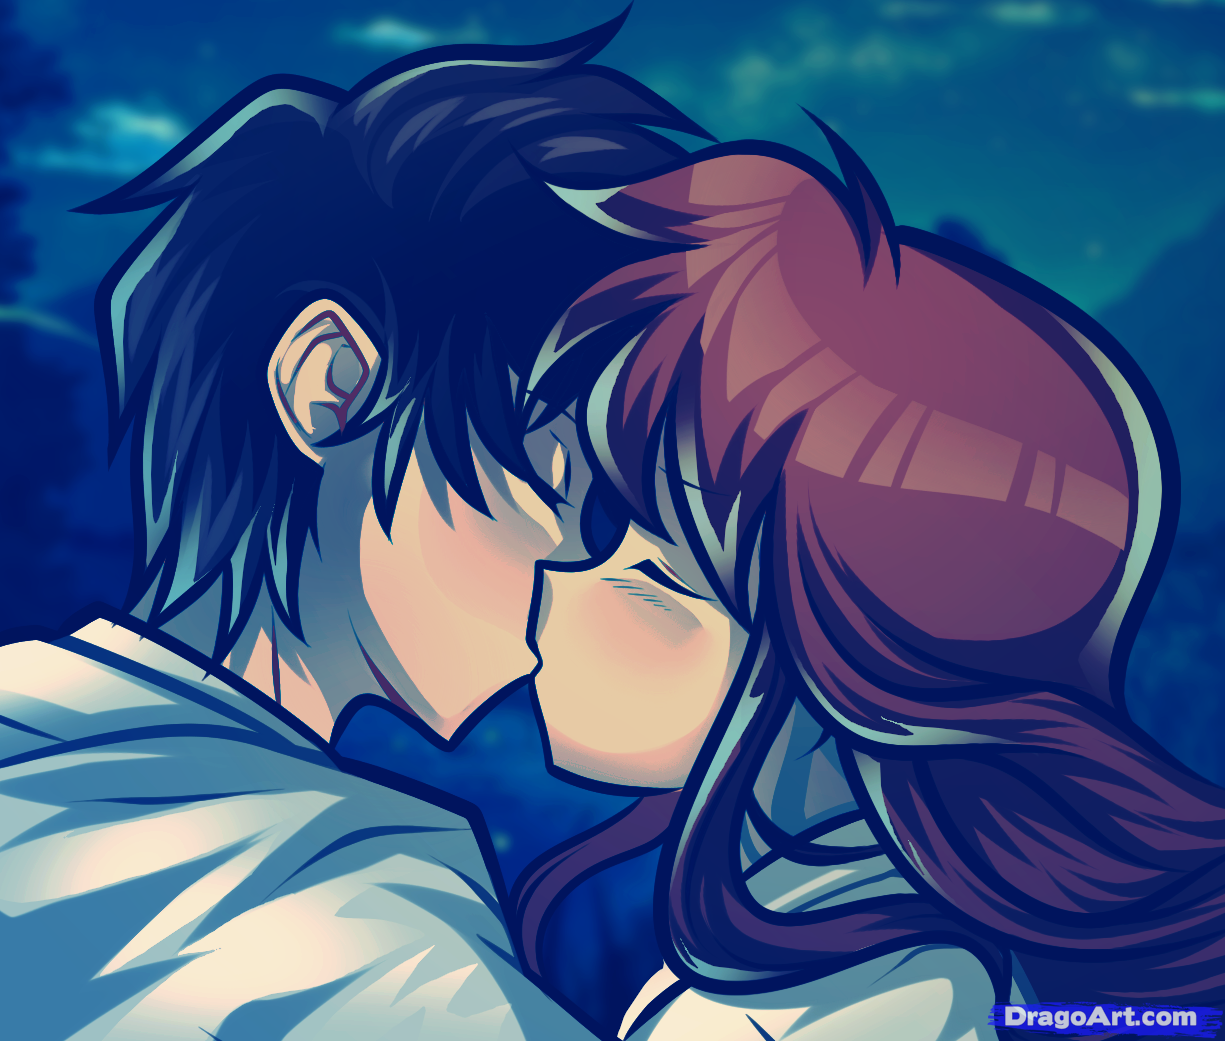 Cute Anime Couple Kissing